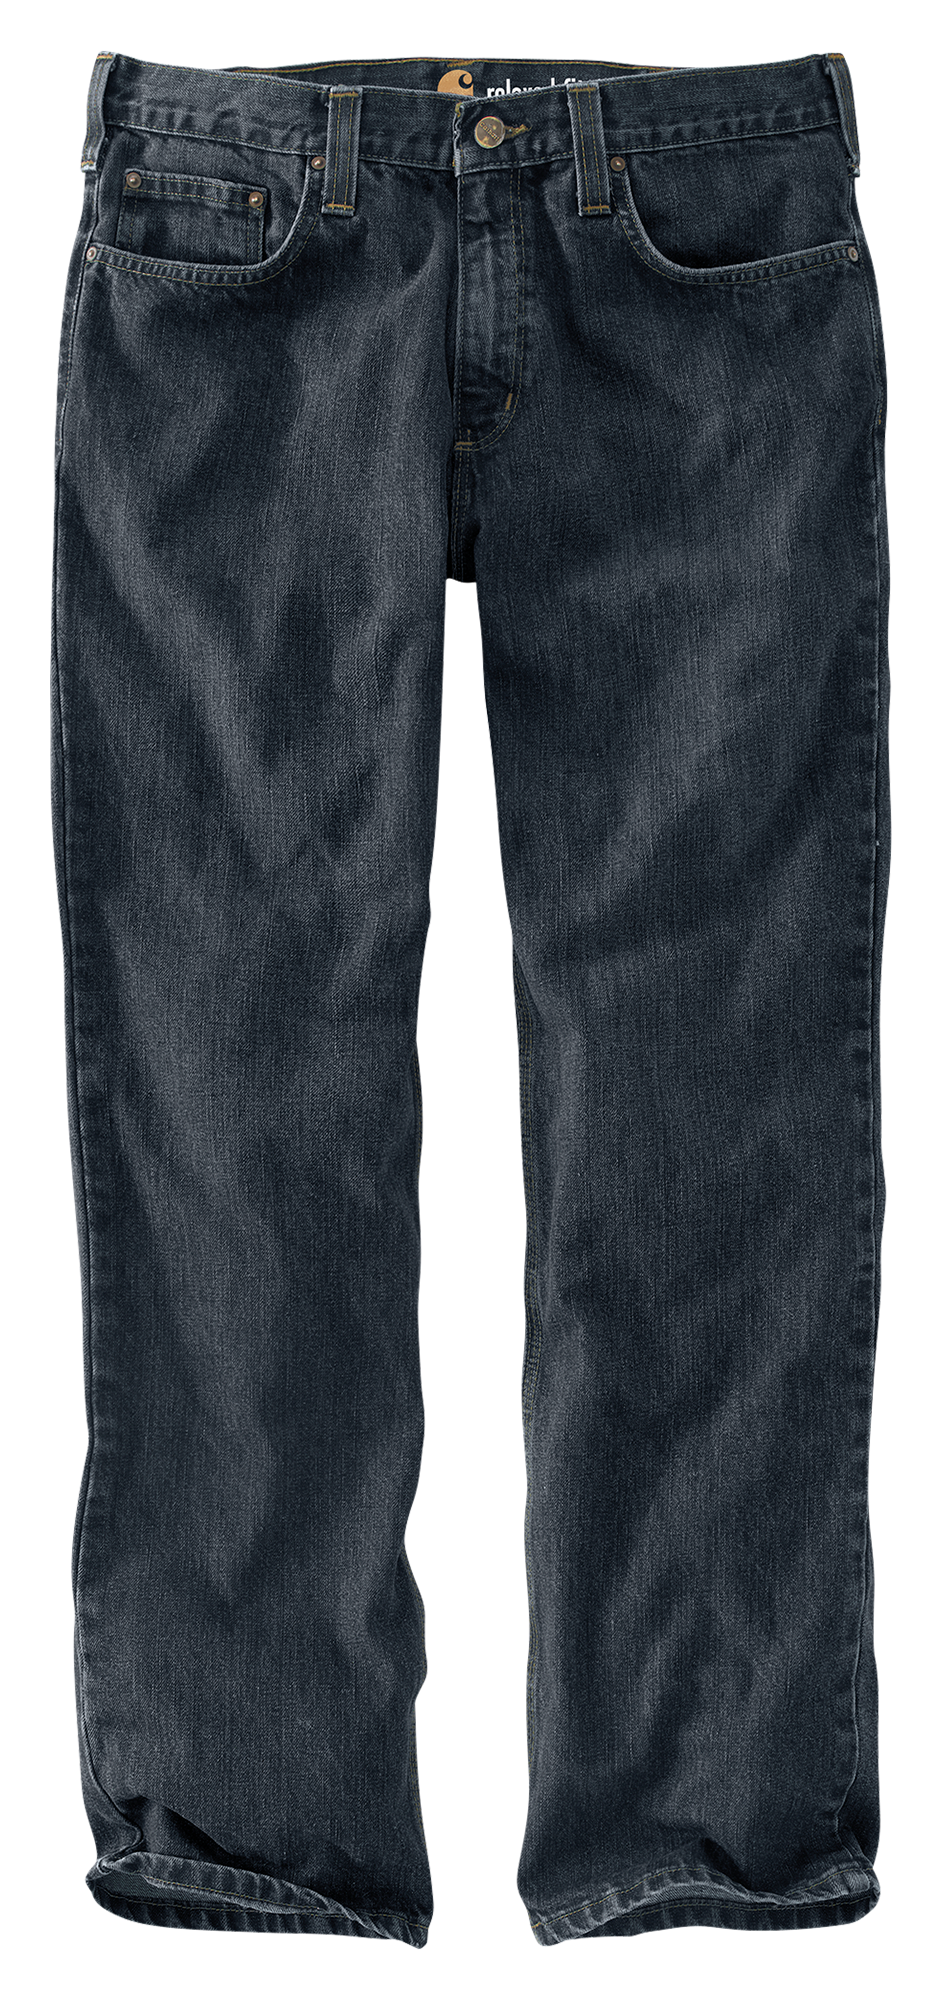 Carhartt Men's Denim Relaxed Fit Jeans - Homer Men and Boys Store